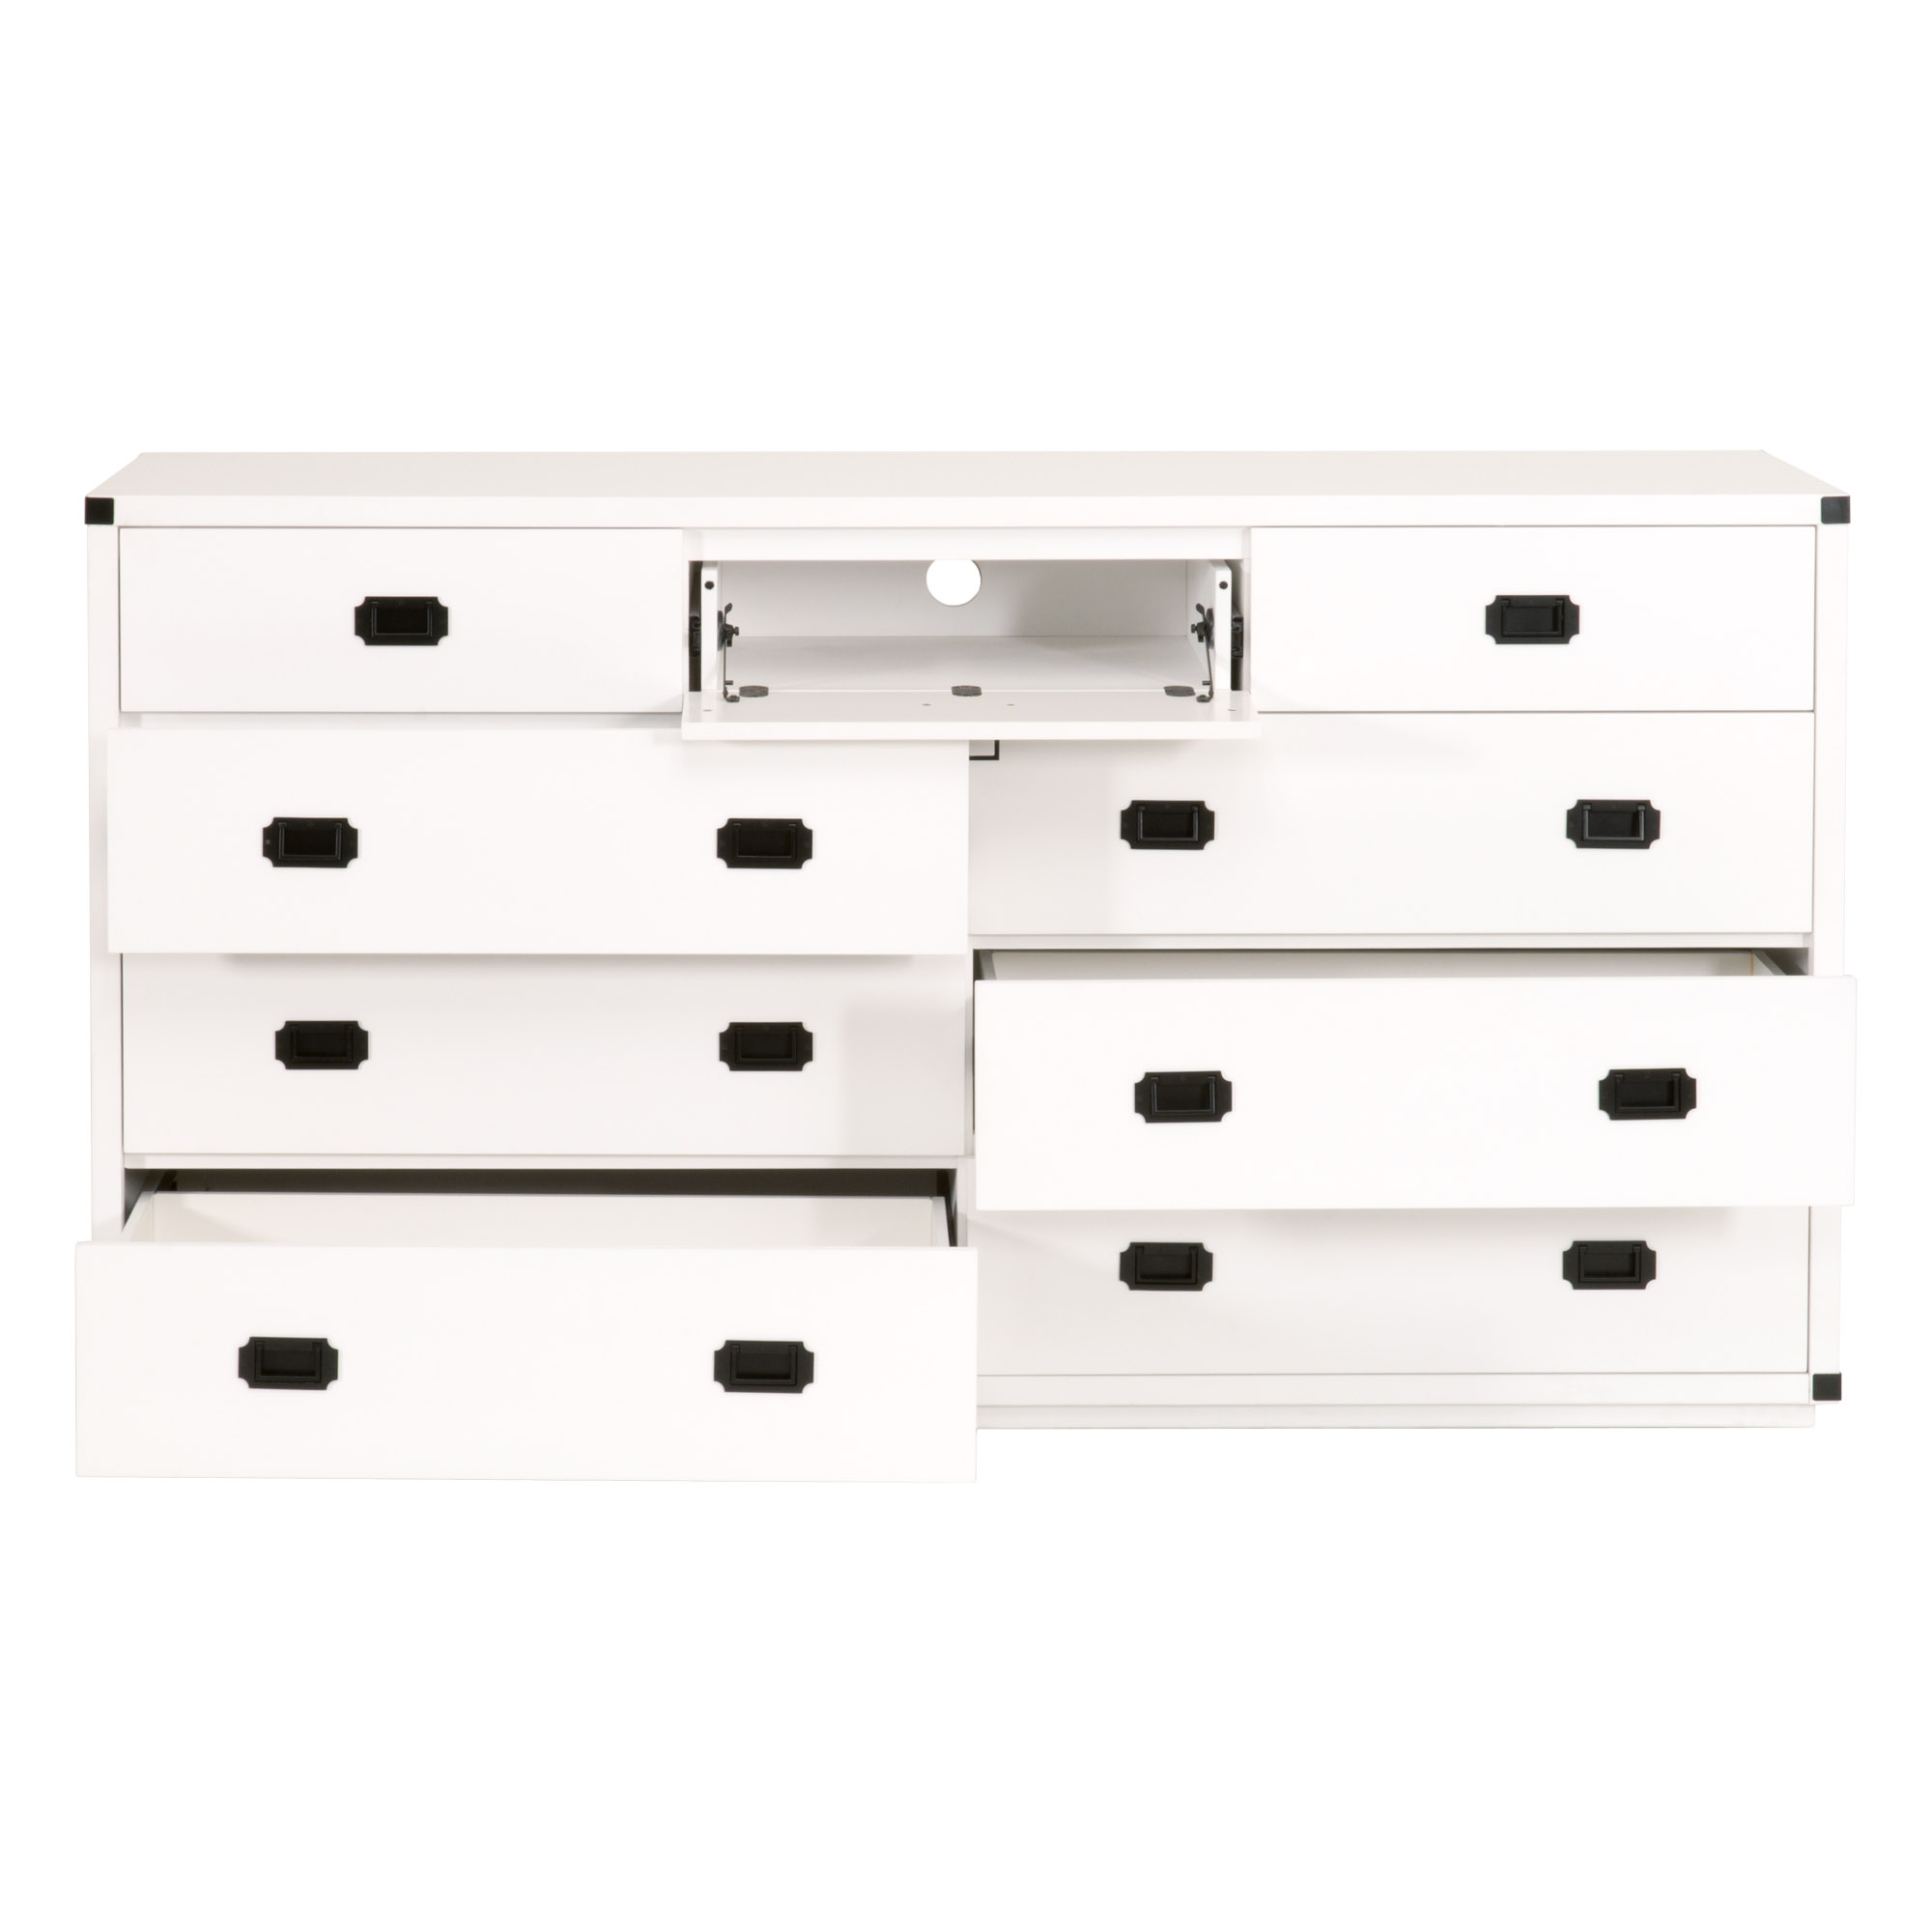 Kendari 9-Drawer Media Dresser, White & Black - DISCONTINUED - Image 6